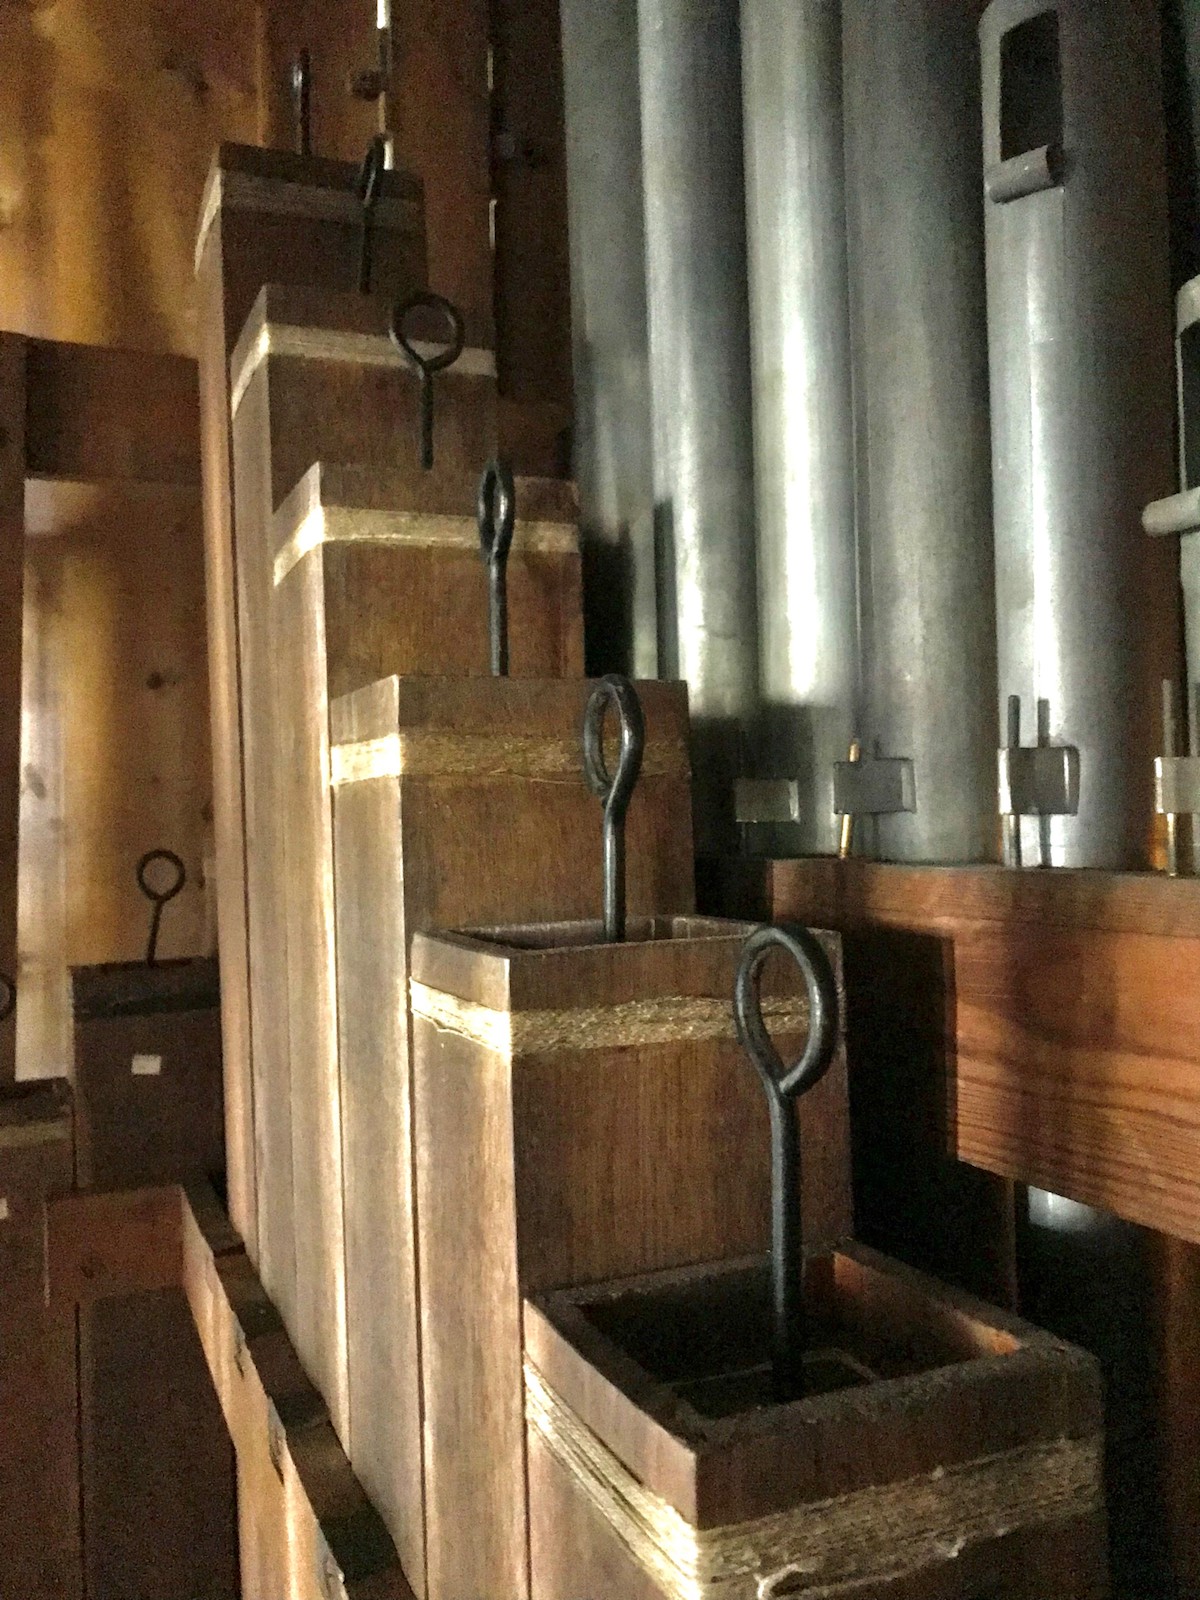 Orgel Beilen metalen grepen stoppen na rest.5